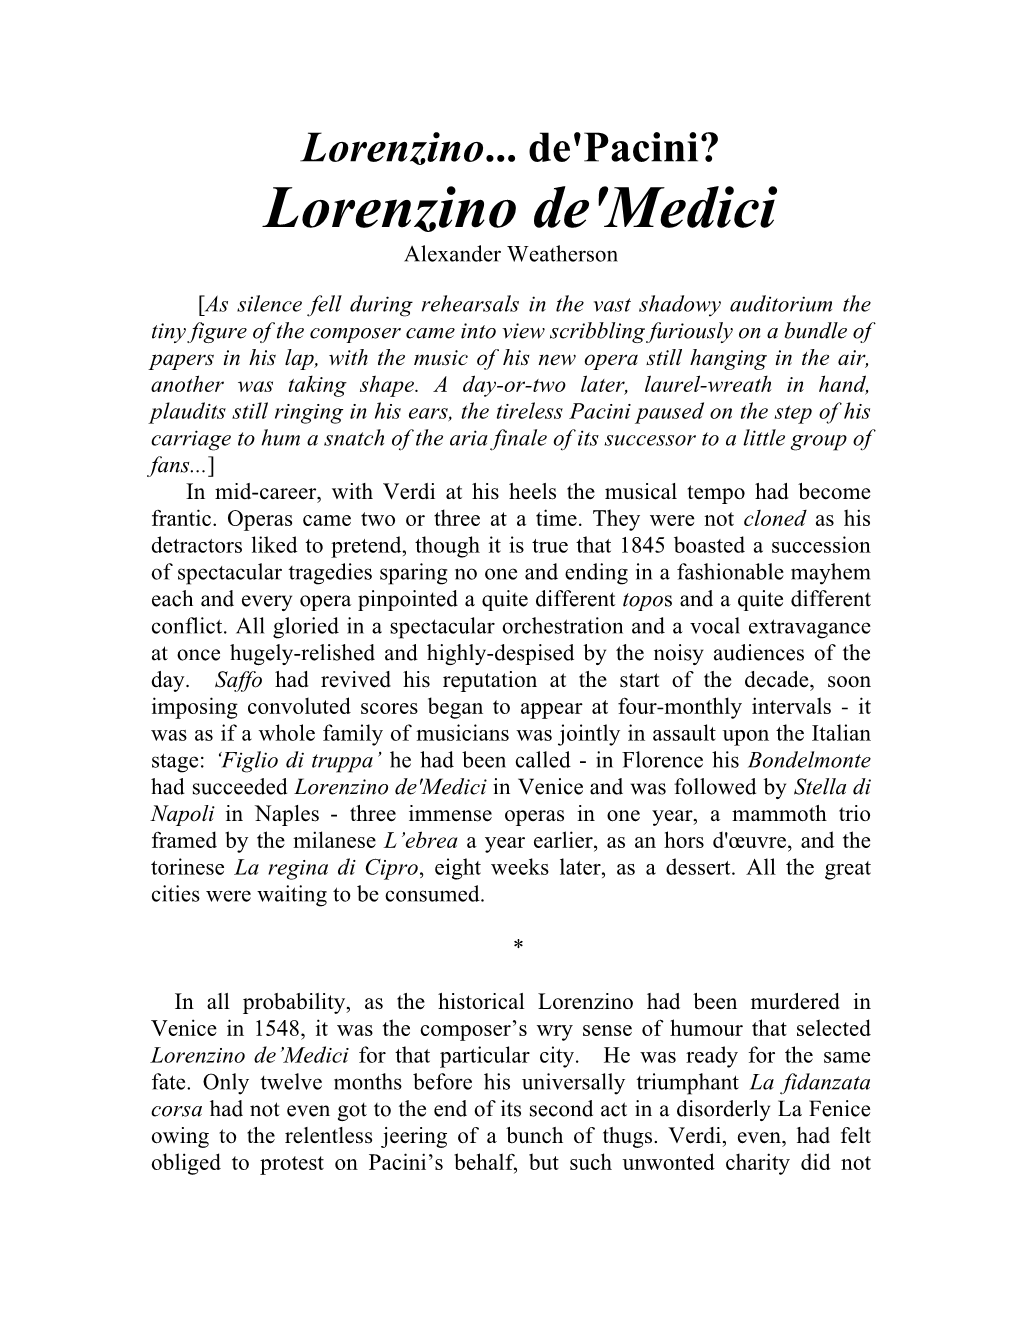 Lorenzino De'medici Alexander Weatherson